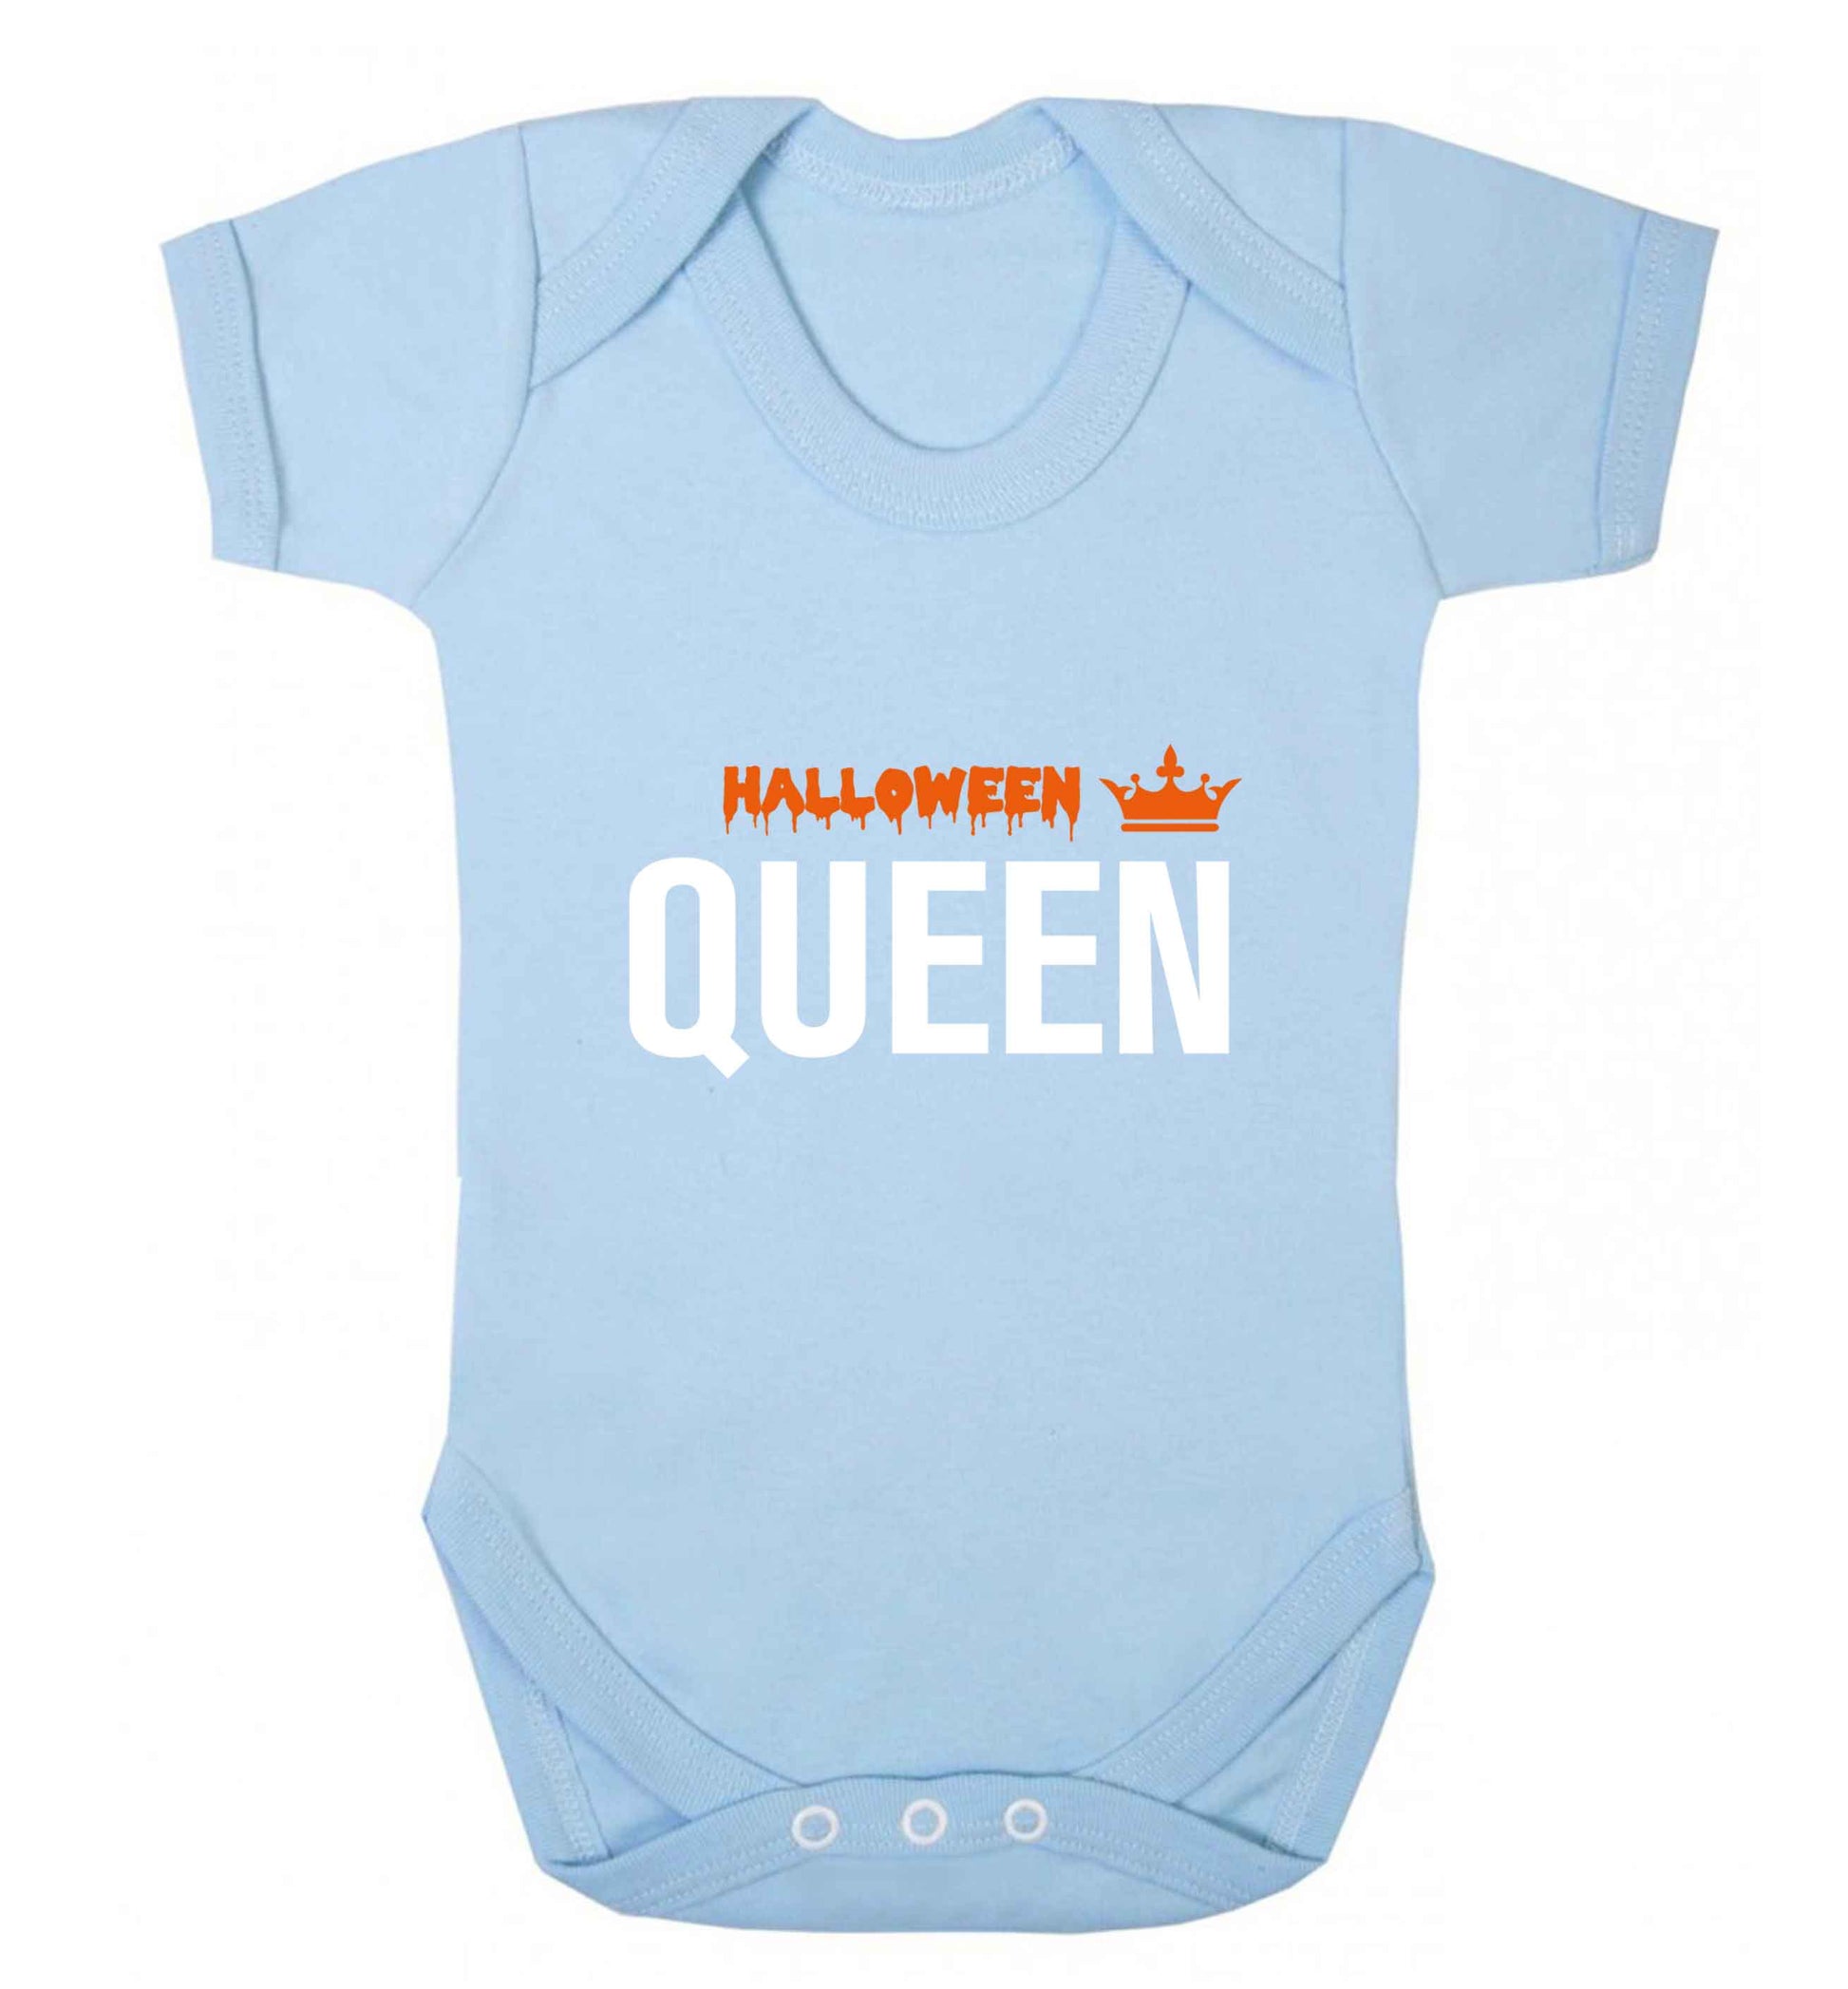 Halloween queen baby vest pale blue 18-24 months